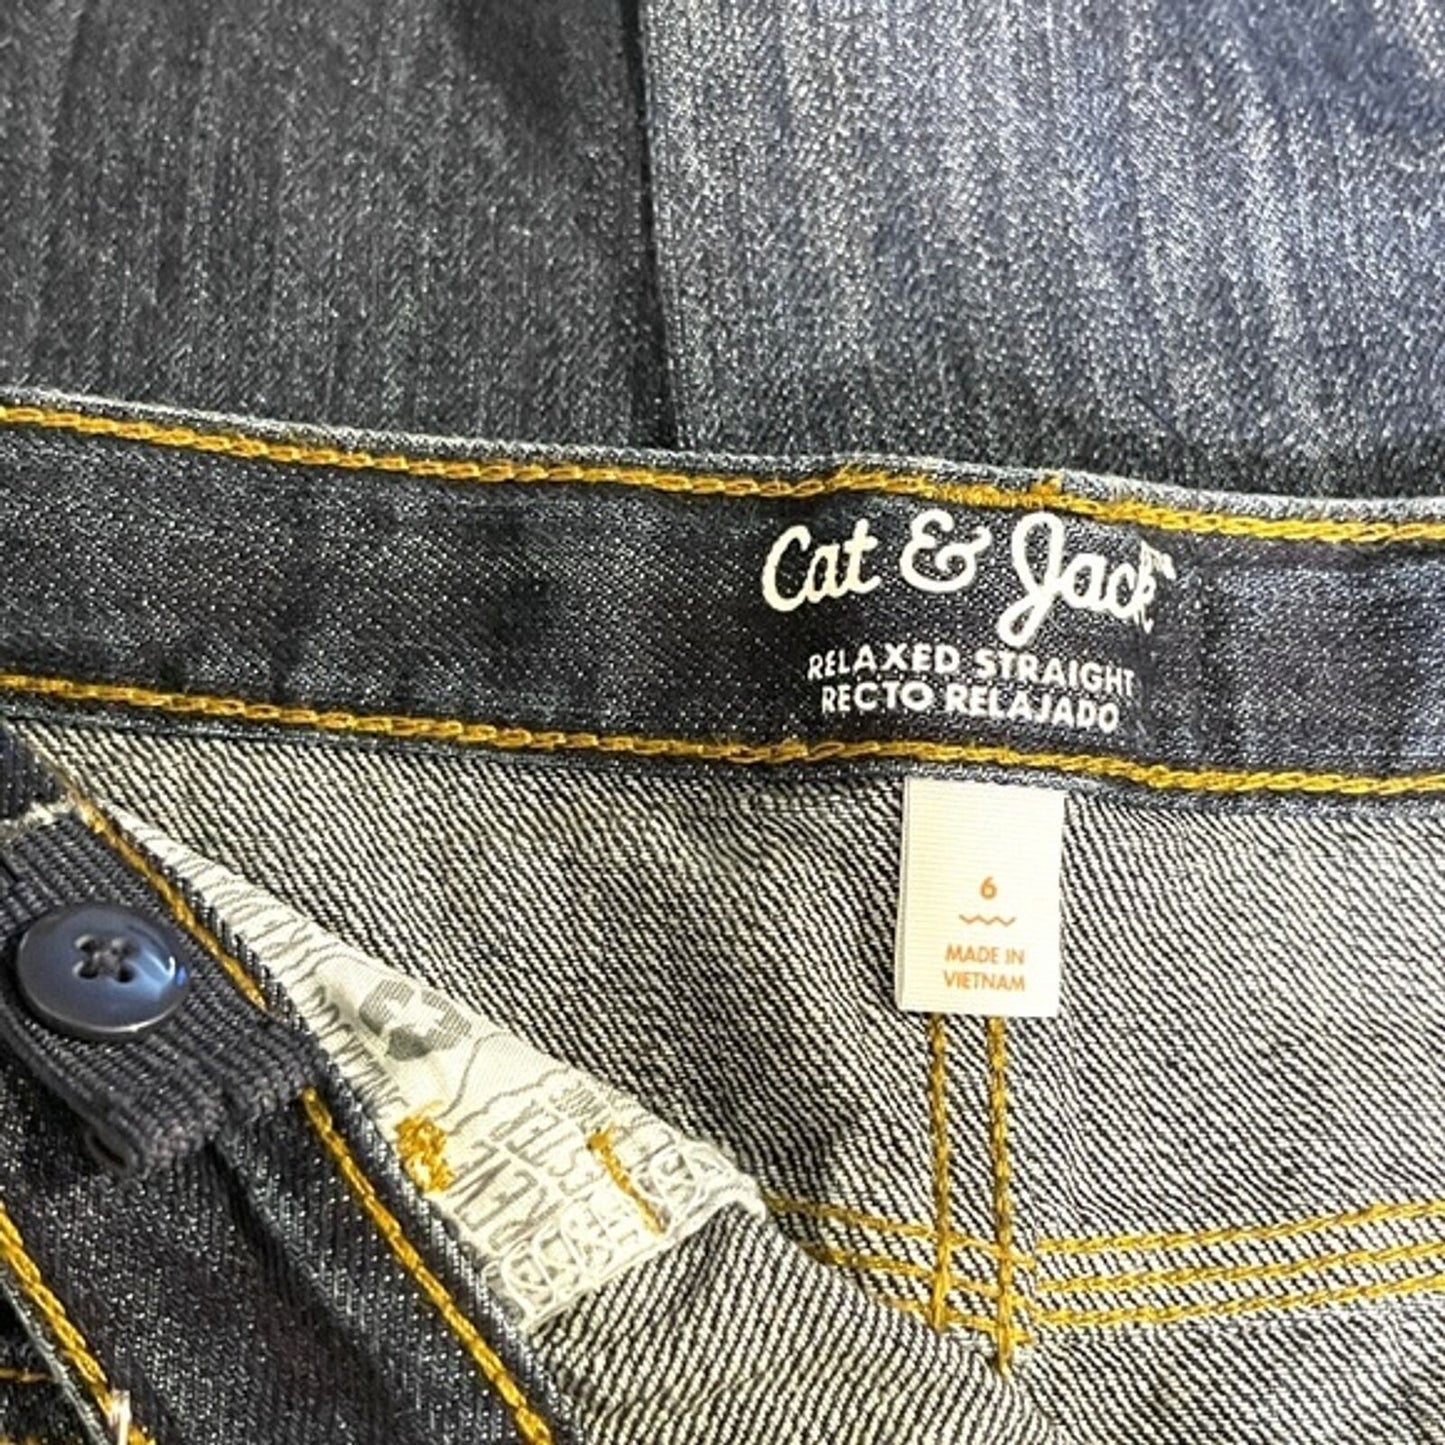 Cat & Jack Boys Straight Relaxed Jeans, Dark Wash Denim Size 6